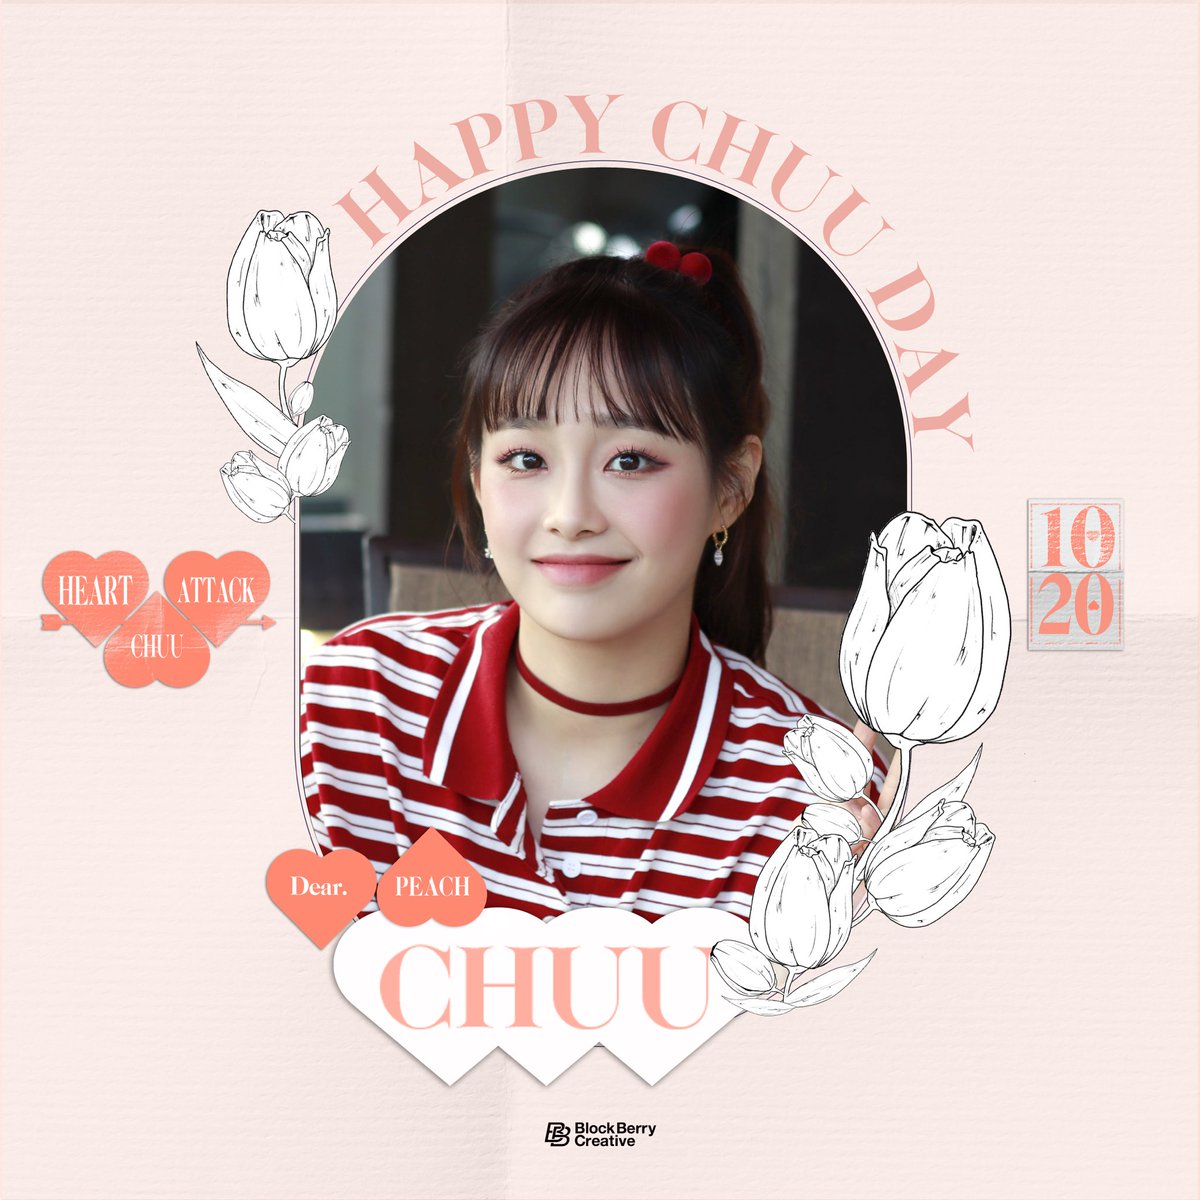 #1020_HBD_Chuu
#Happy_Chuu_Day

이달의 소녀의 갱얼쥐🐶 
츄의 생일을 축하합니다💕

#이달의소녀 #츄 #LOONA #Chuu